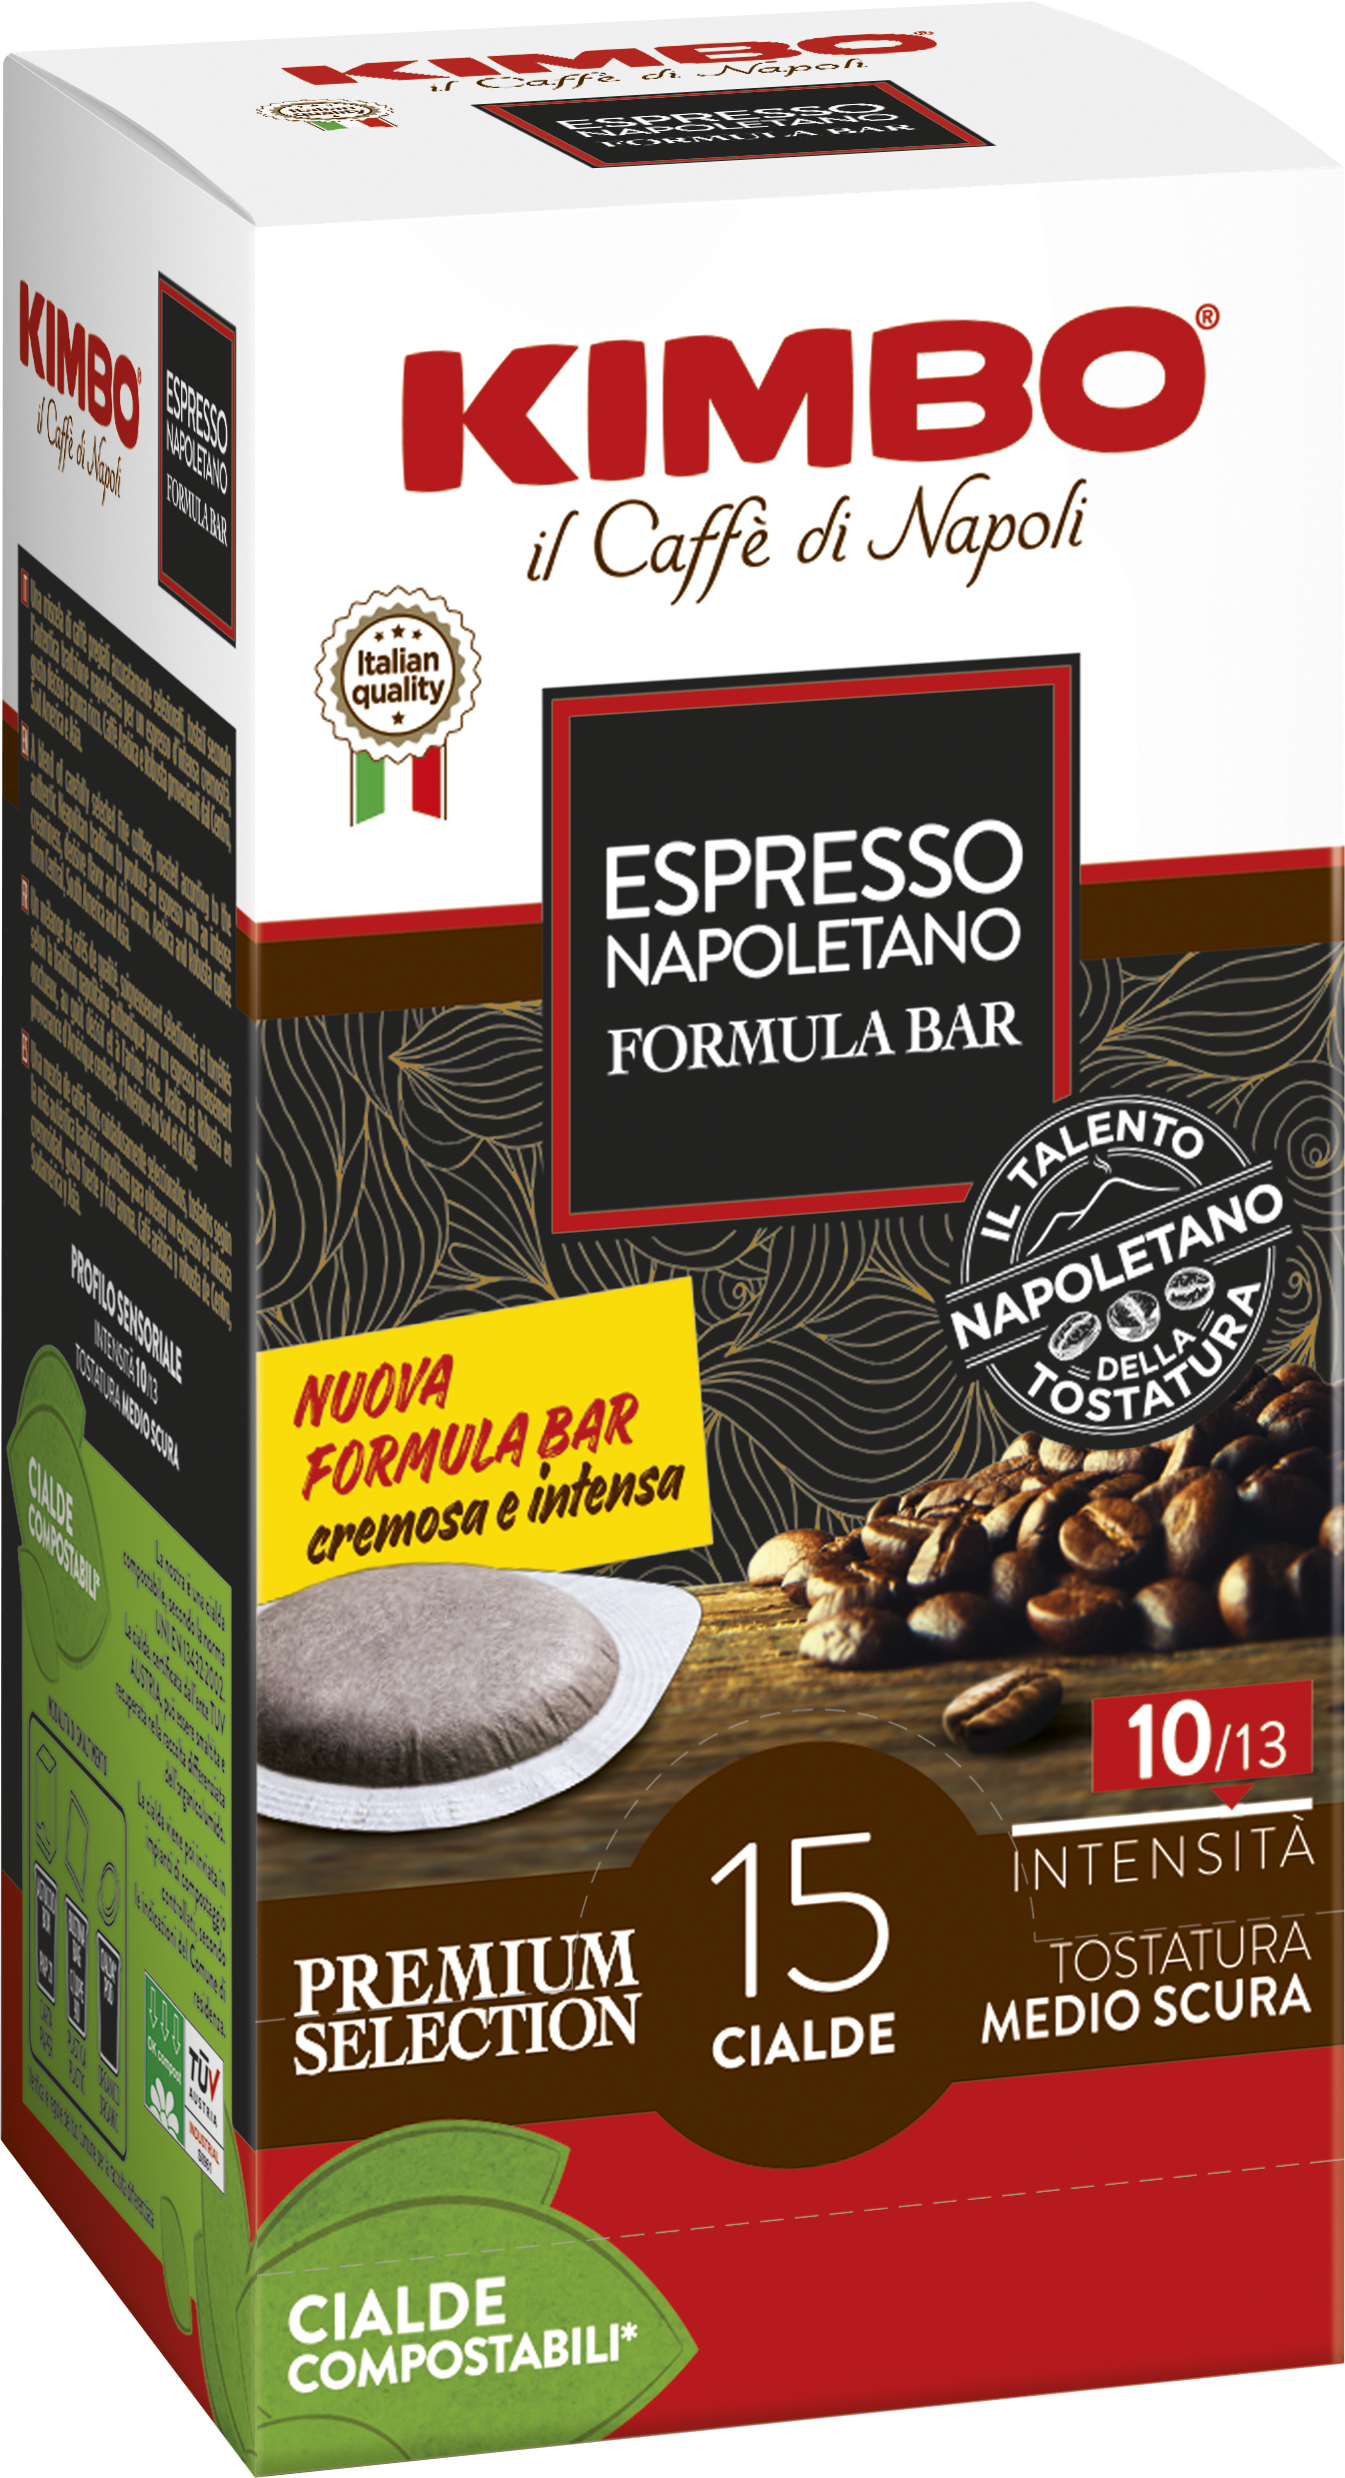 Kimbo coffee Espresso pods